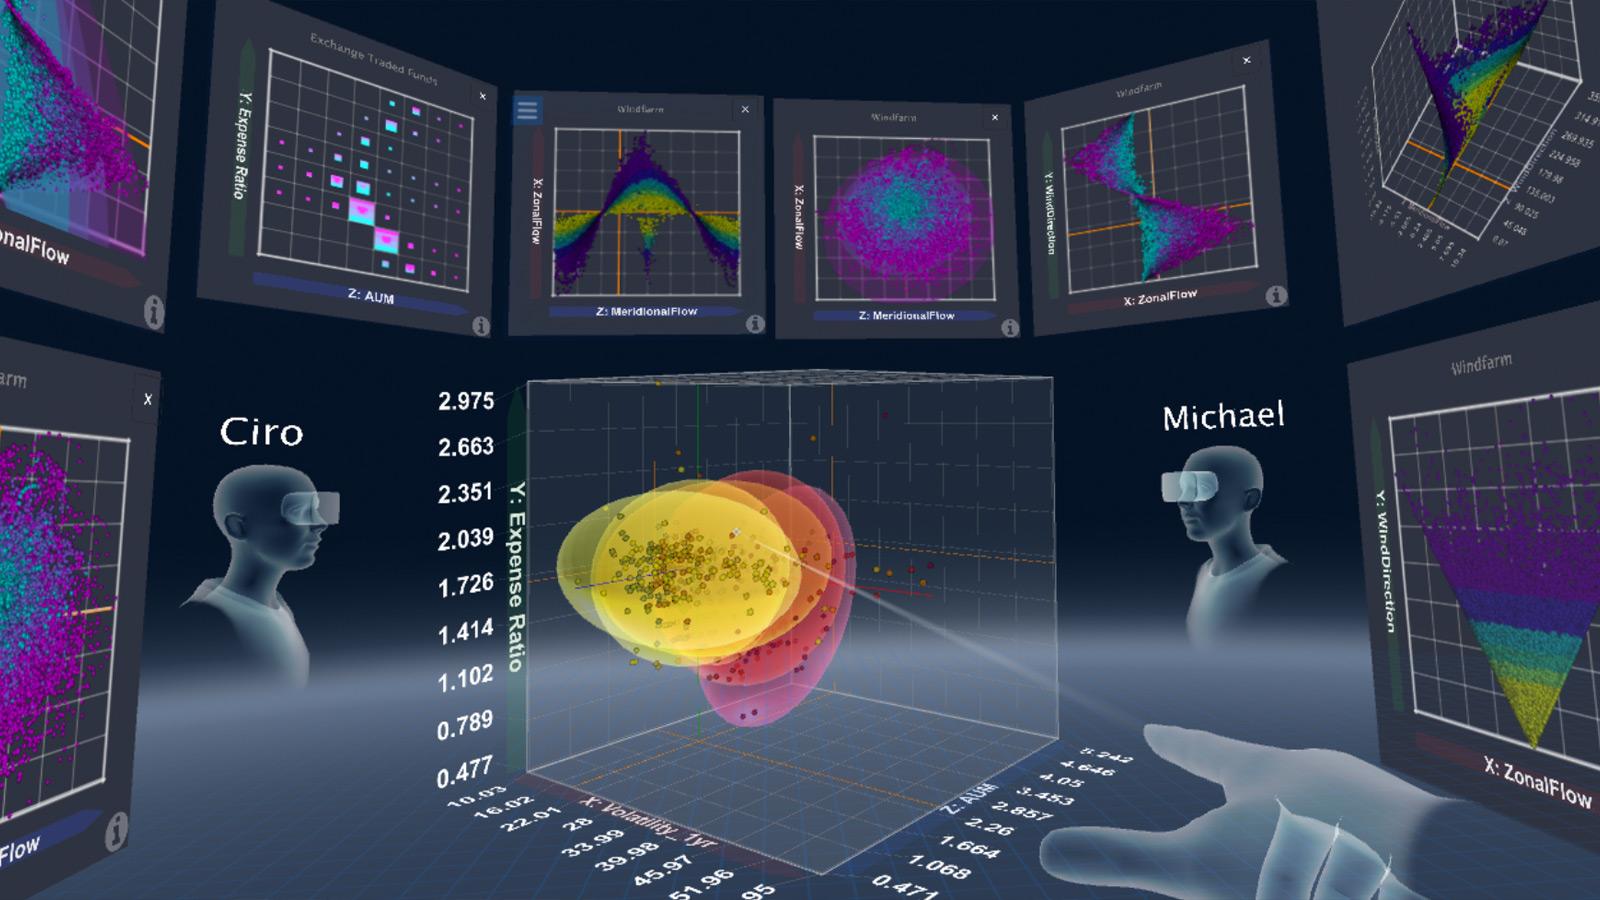 Virtualitics holographic projections of data analytics